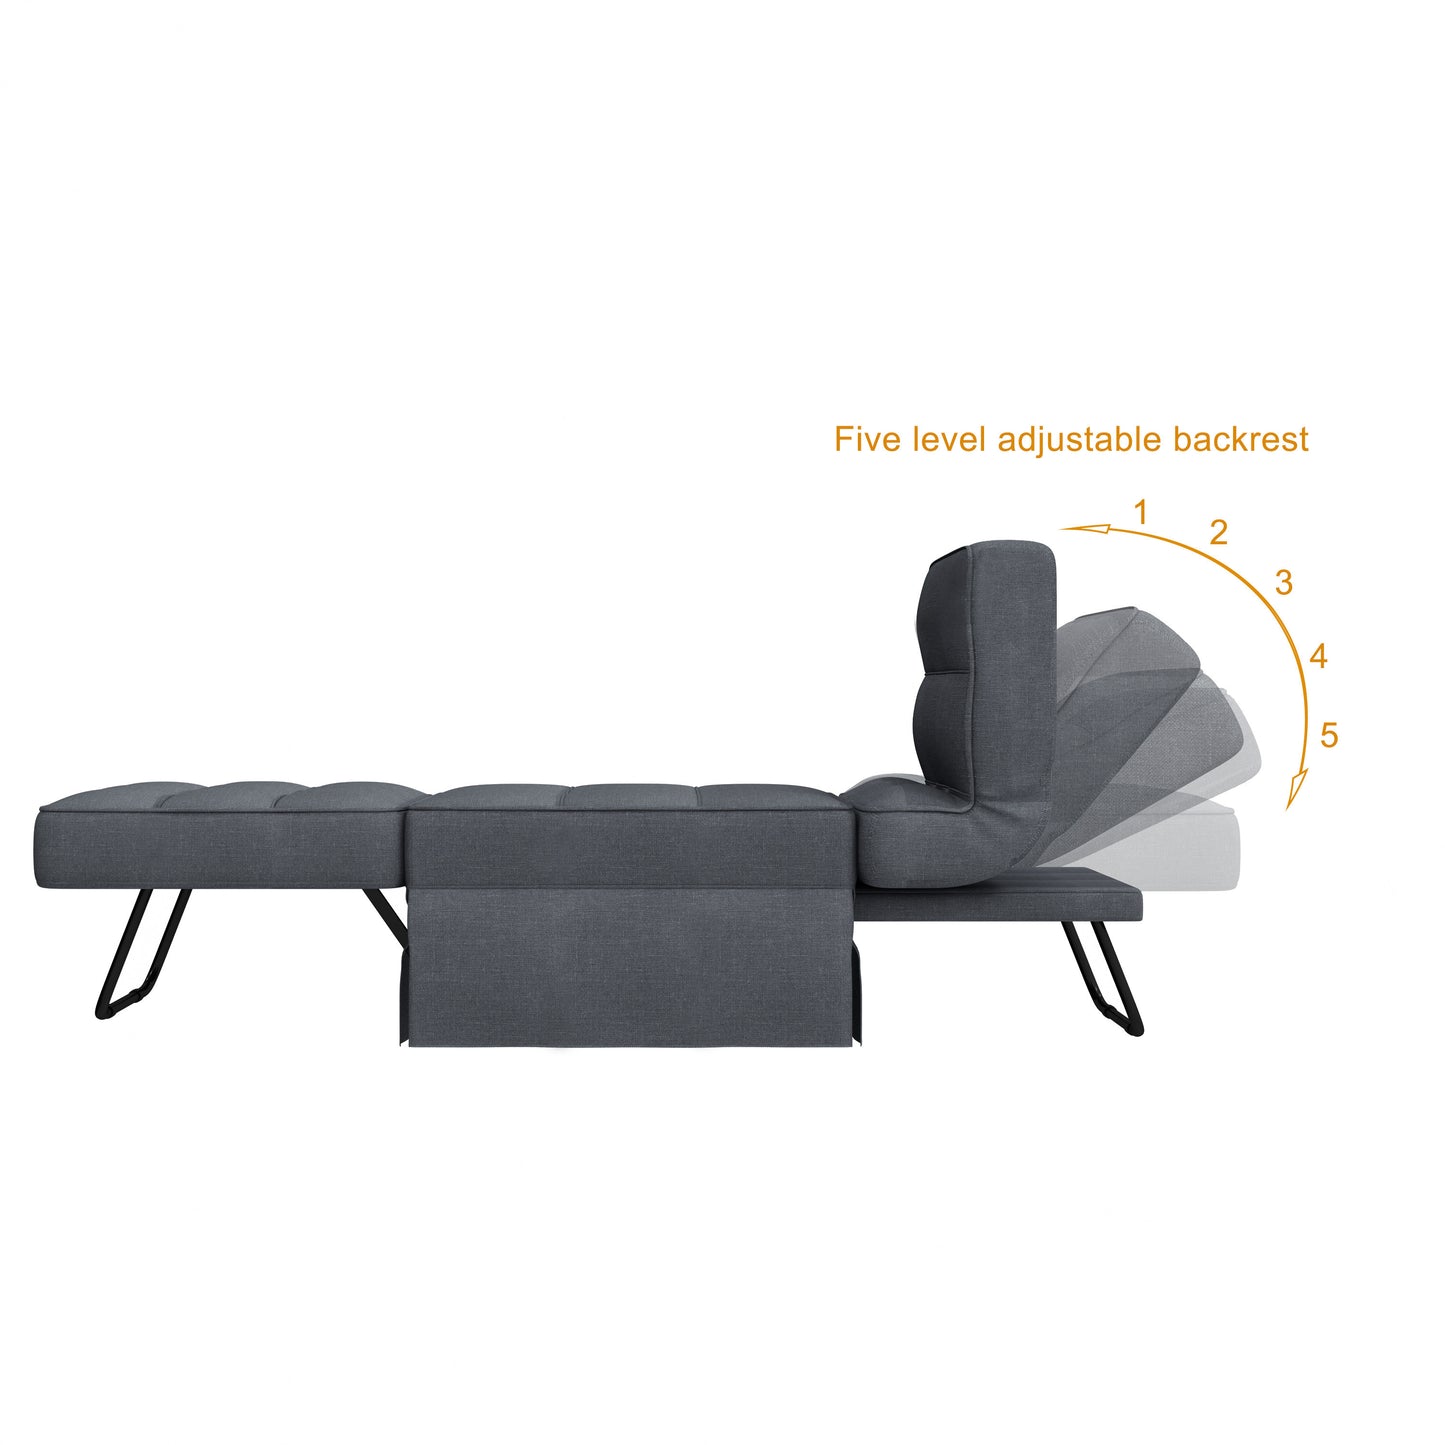 Living Room Bed Room Metal Frame with Dark Grey Upholstery Recliner